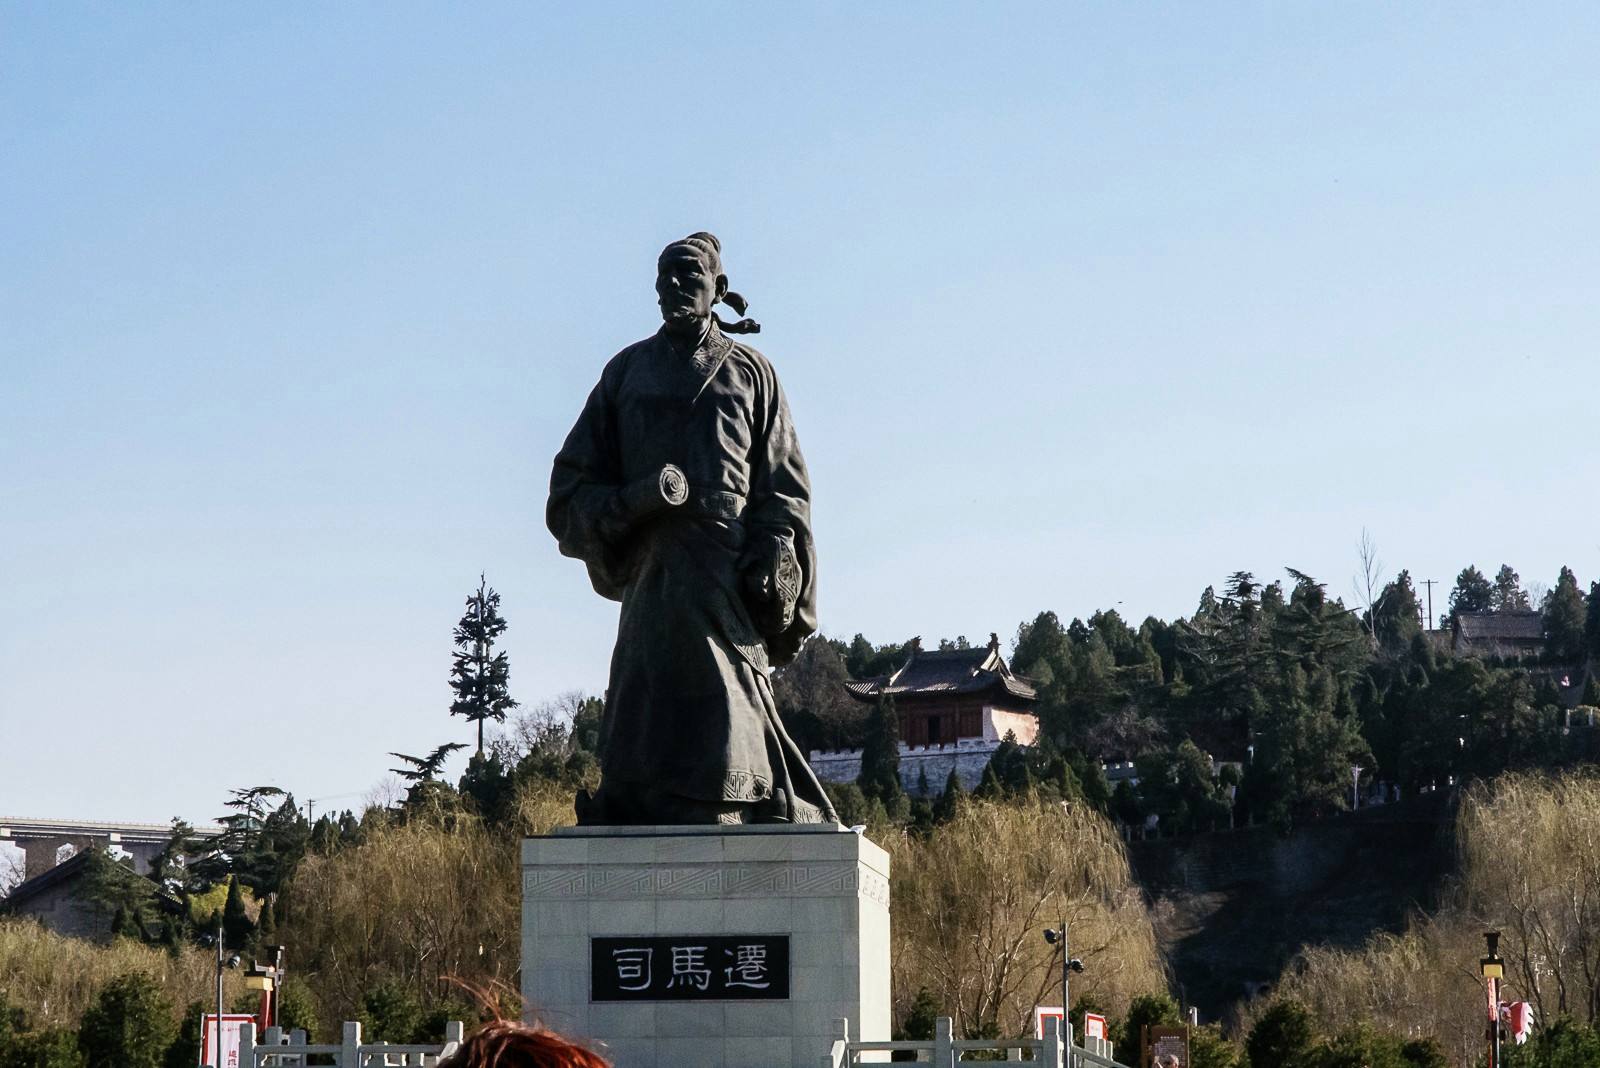 The statue of Sima Qian 司马迁塑像